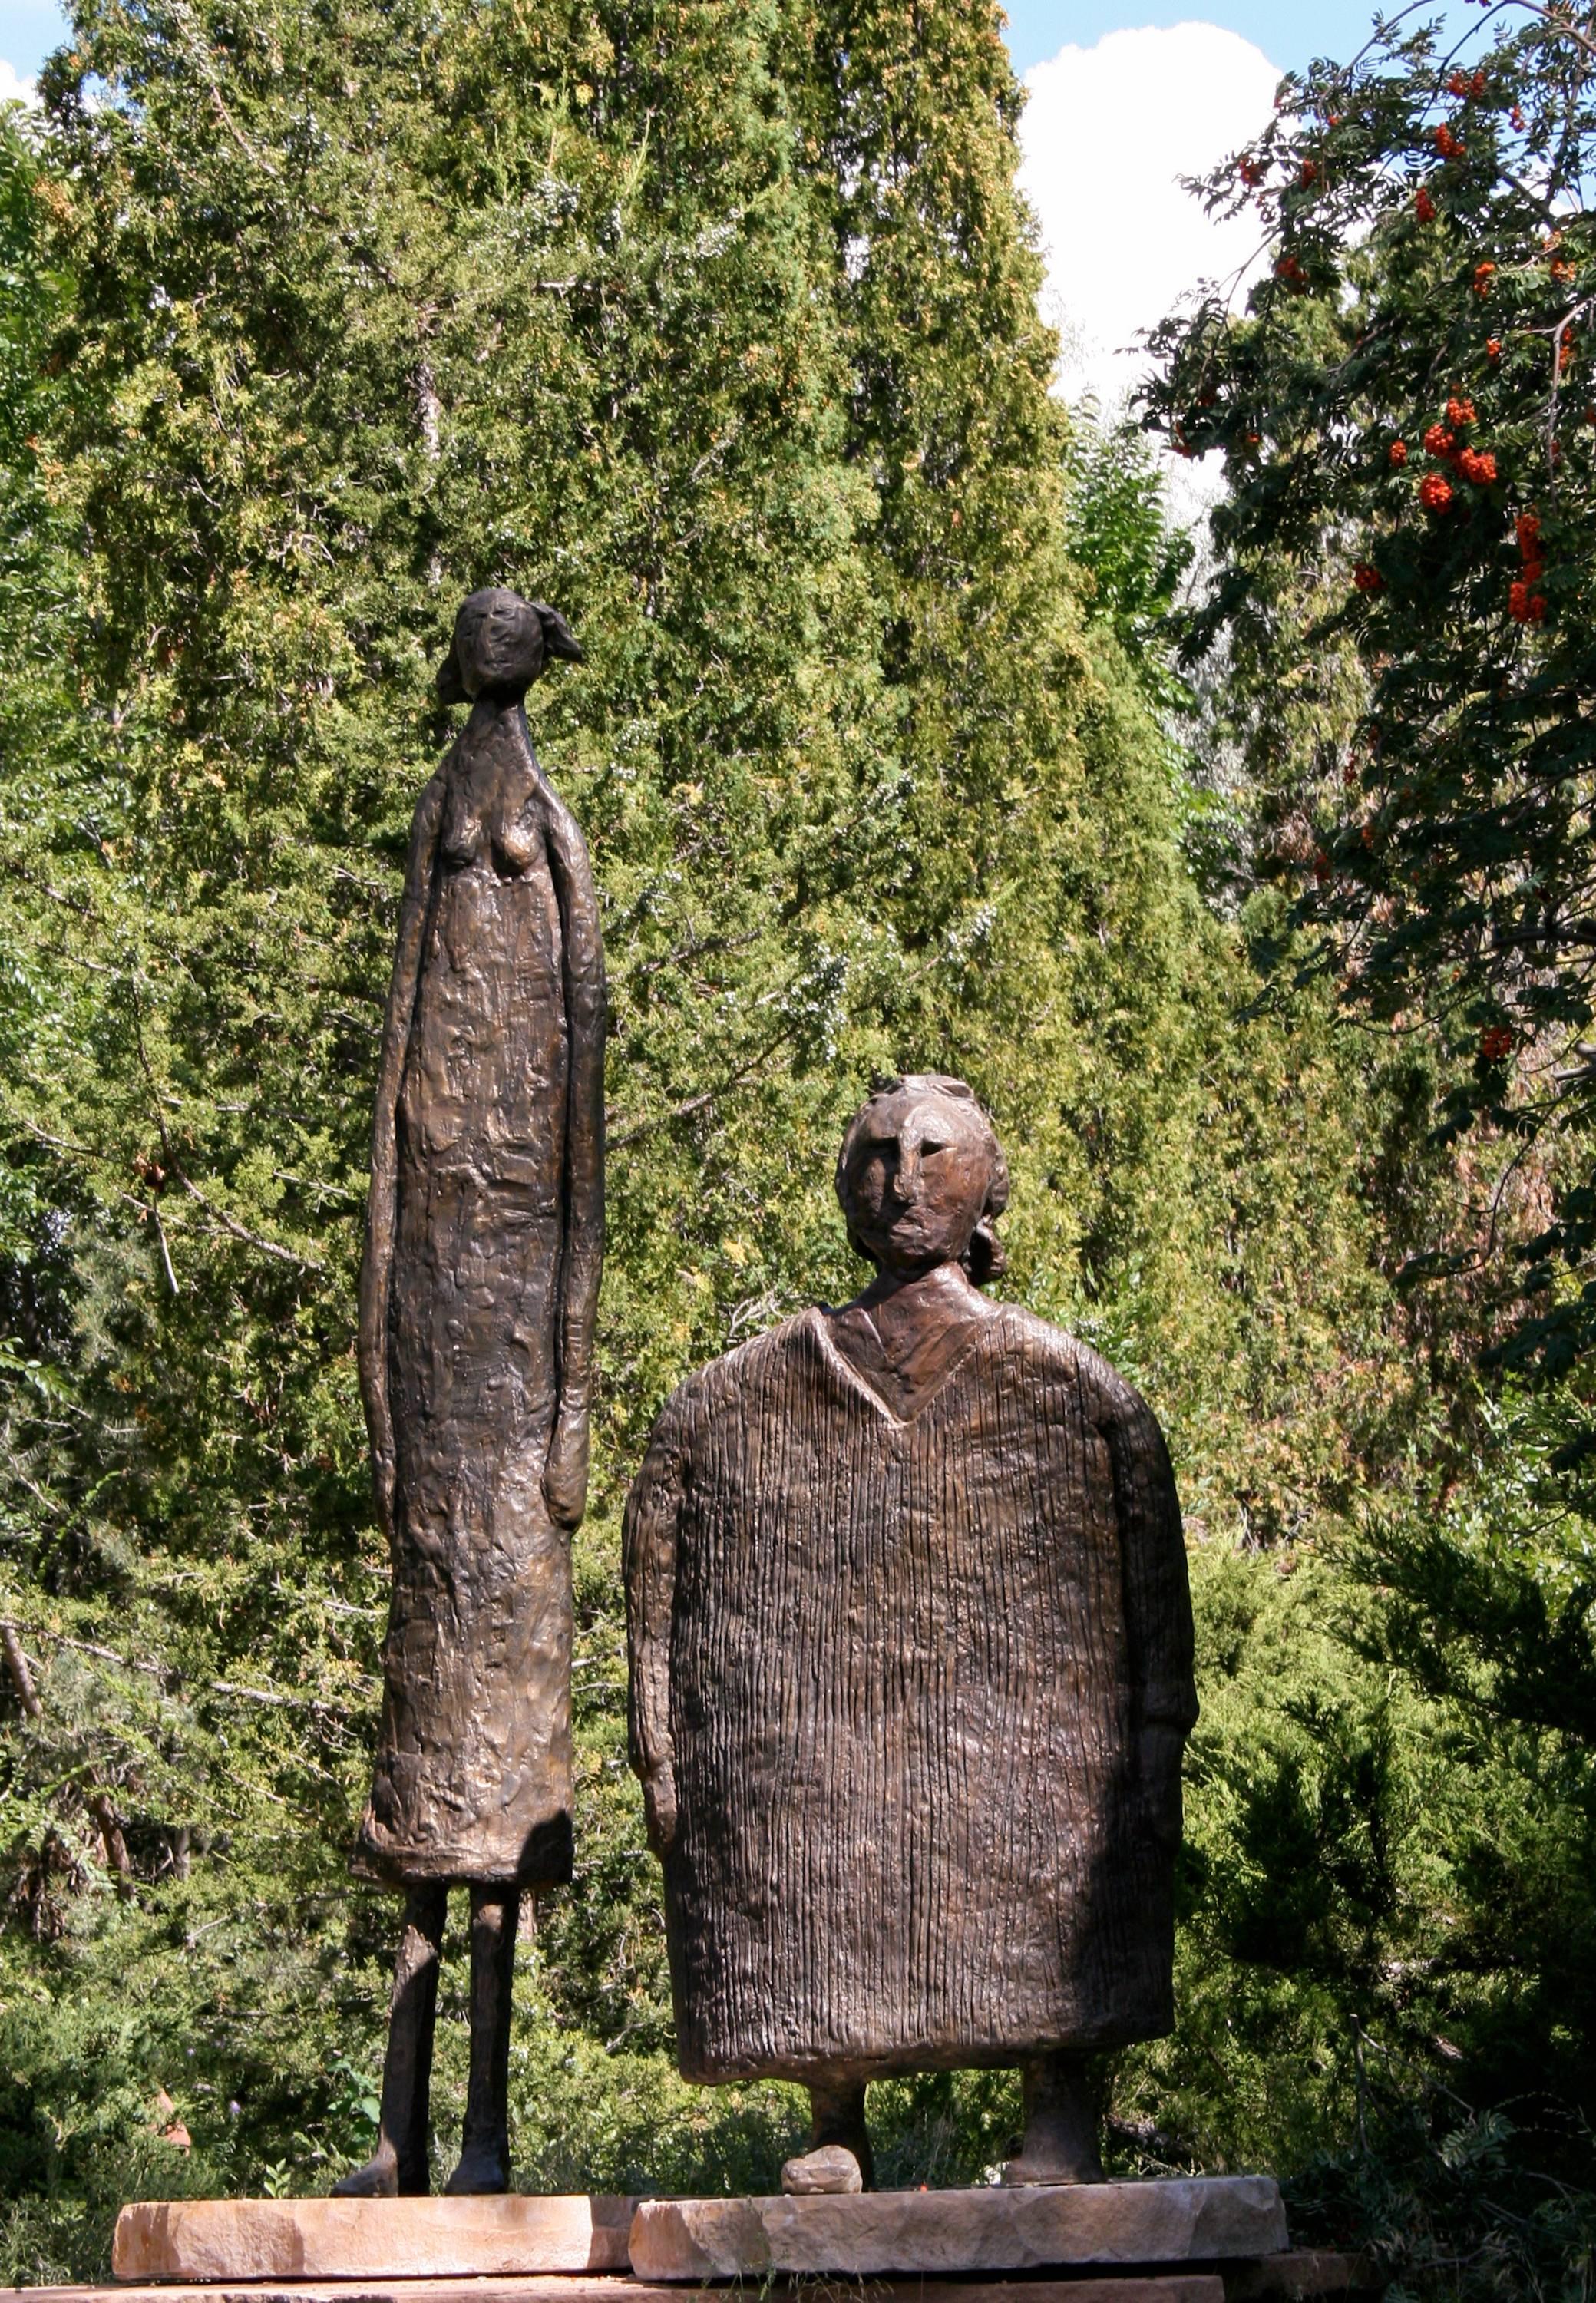 Horizontes (Horizons), Eduardo Oropeza, bronze friends sculpture, monumental 2